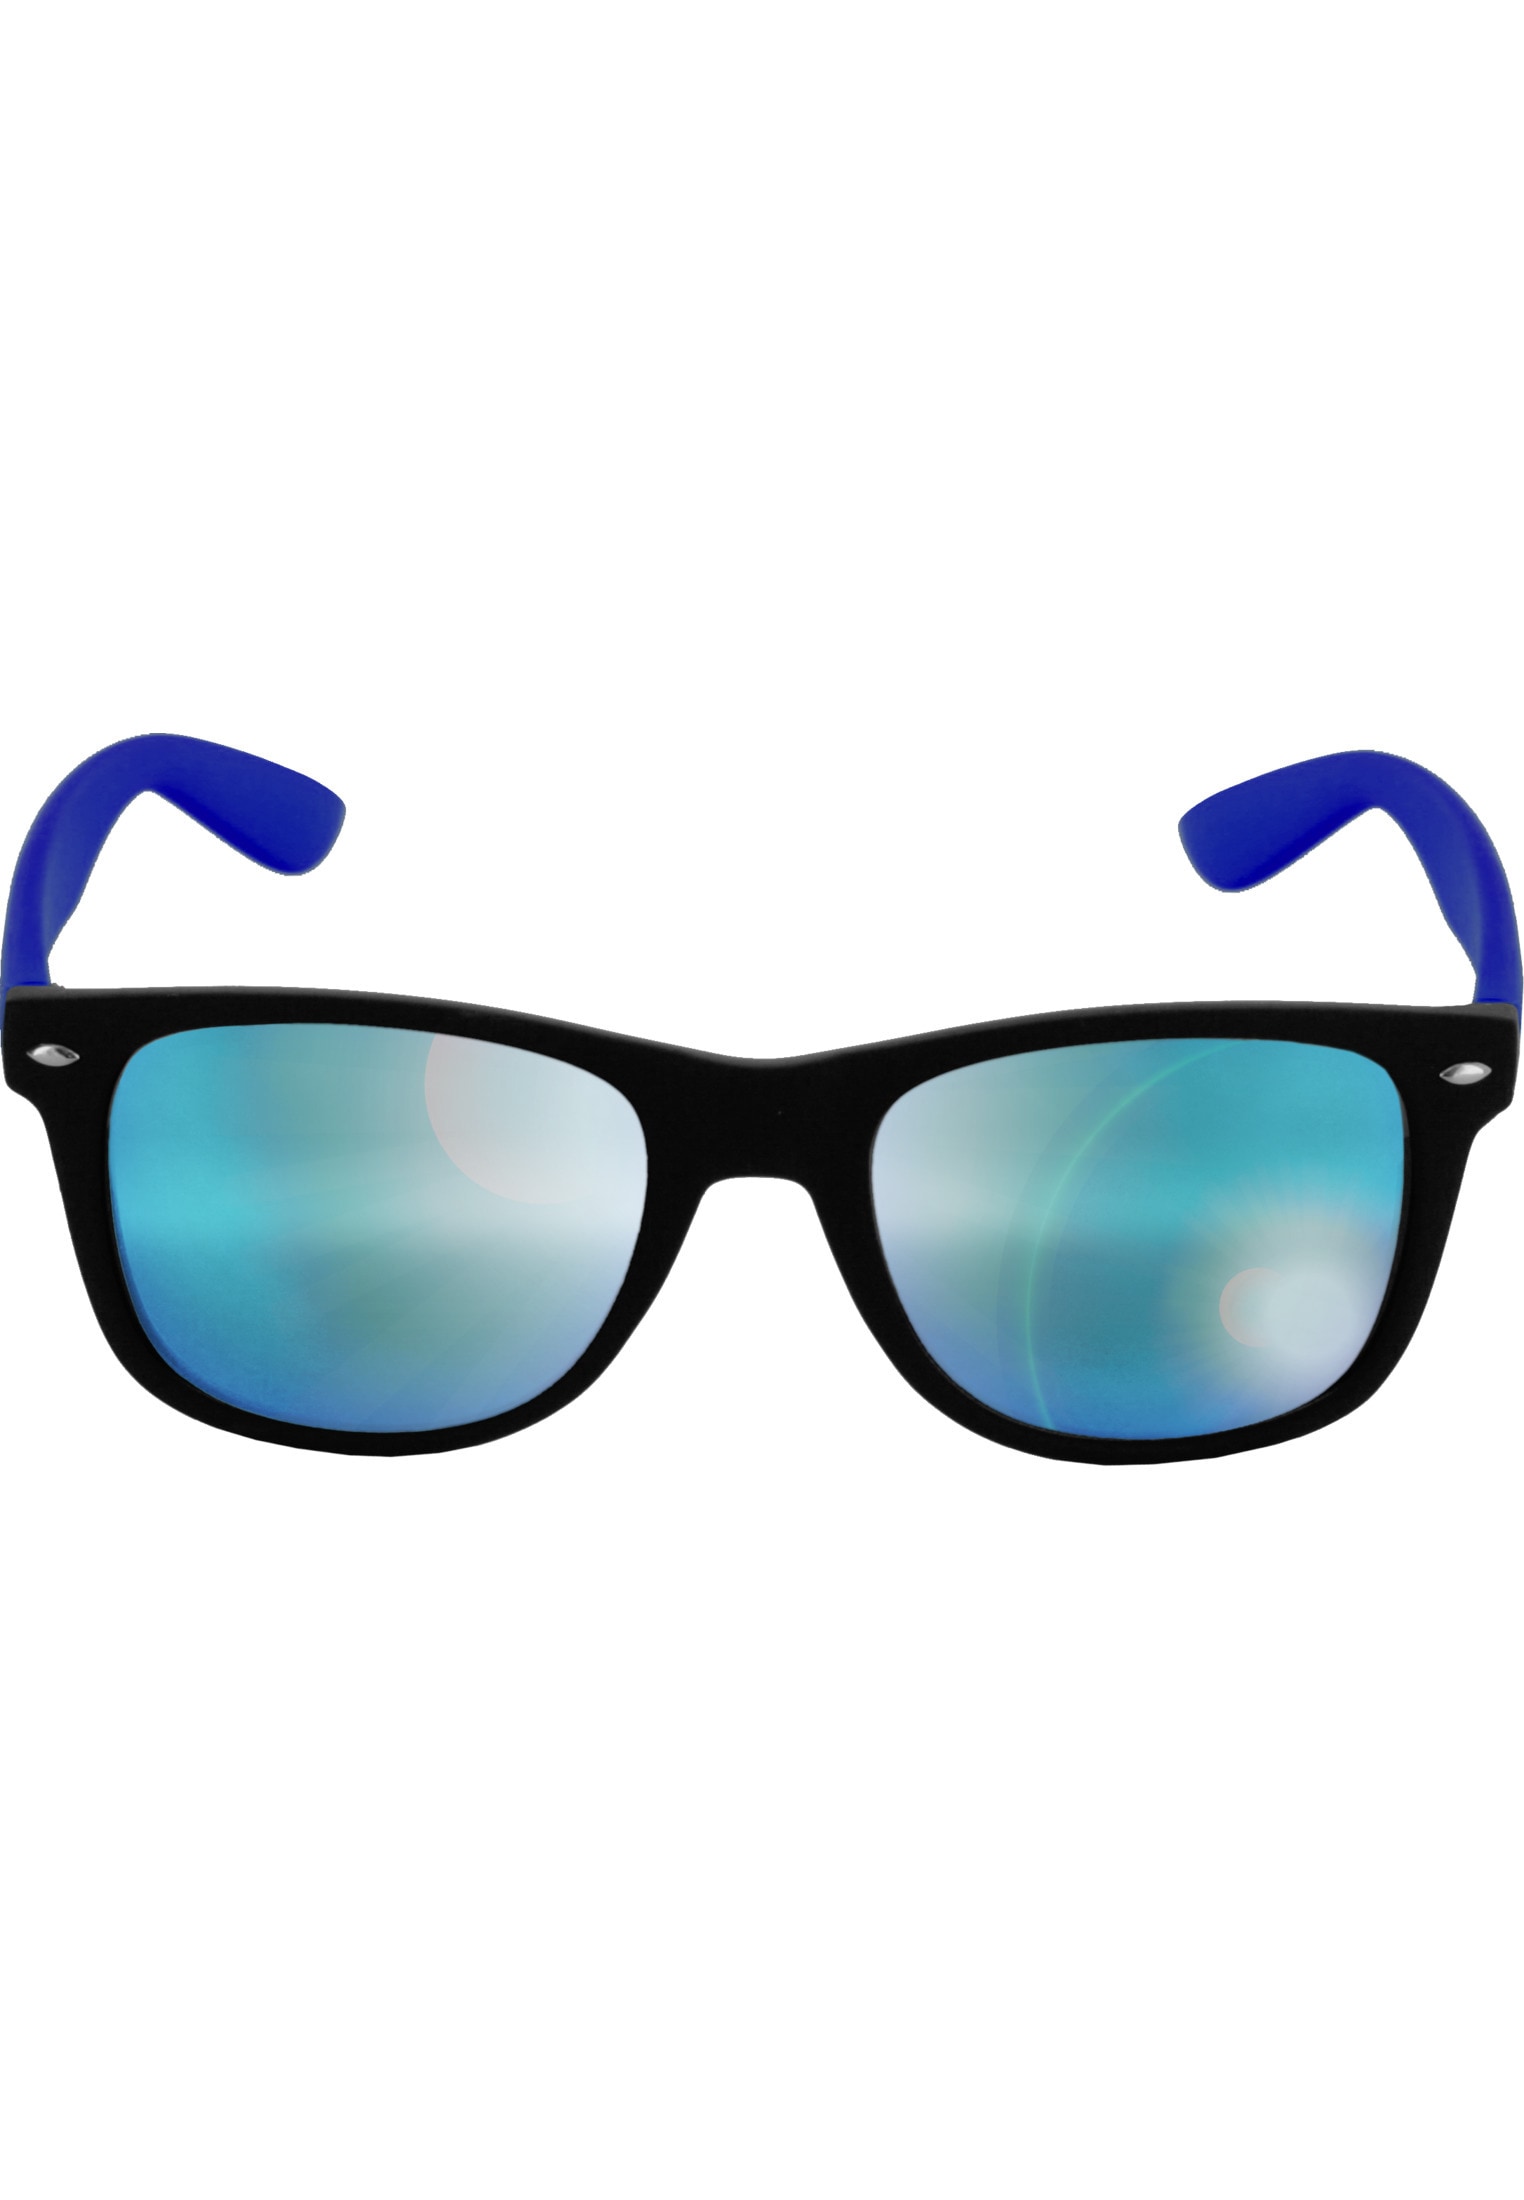 MSTRDS Sonnenbrille Mirror« | Sunglasses Likoma BAUR online »Accessoires bestellen